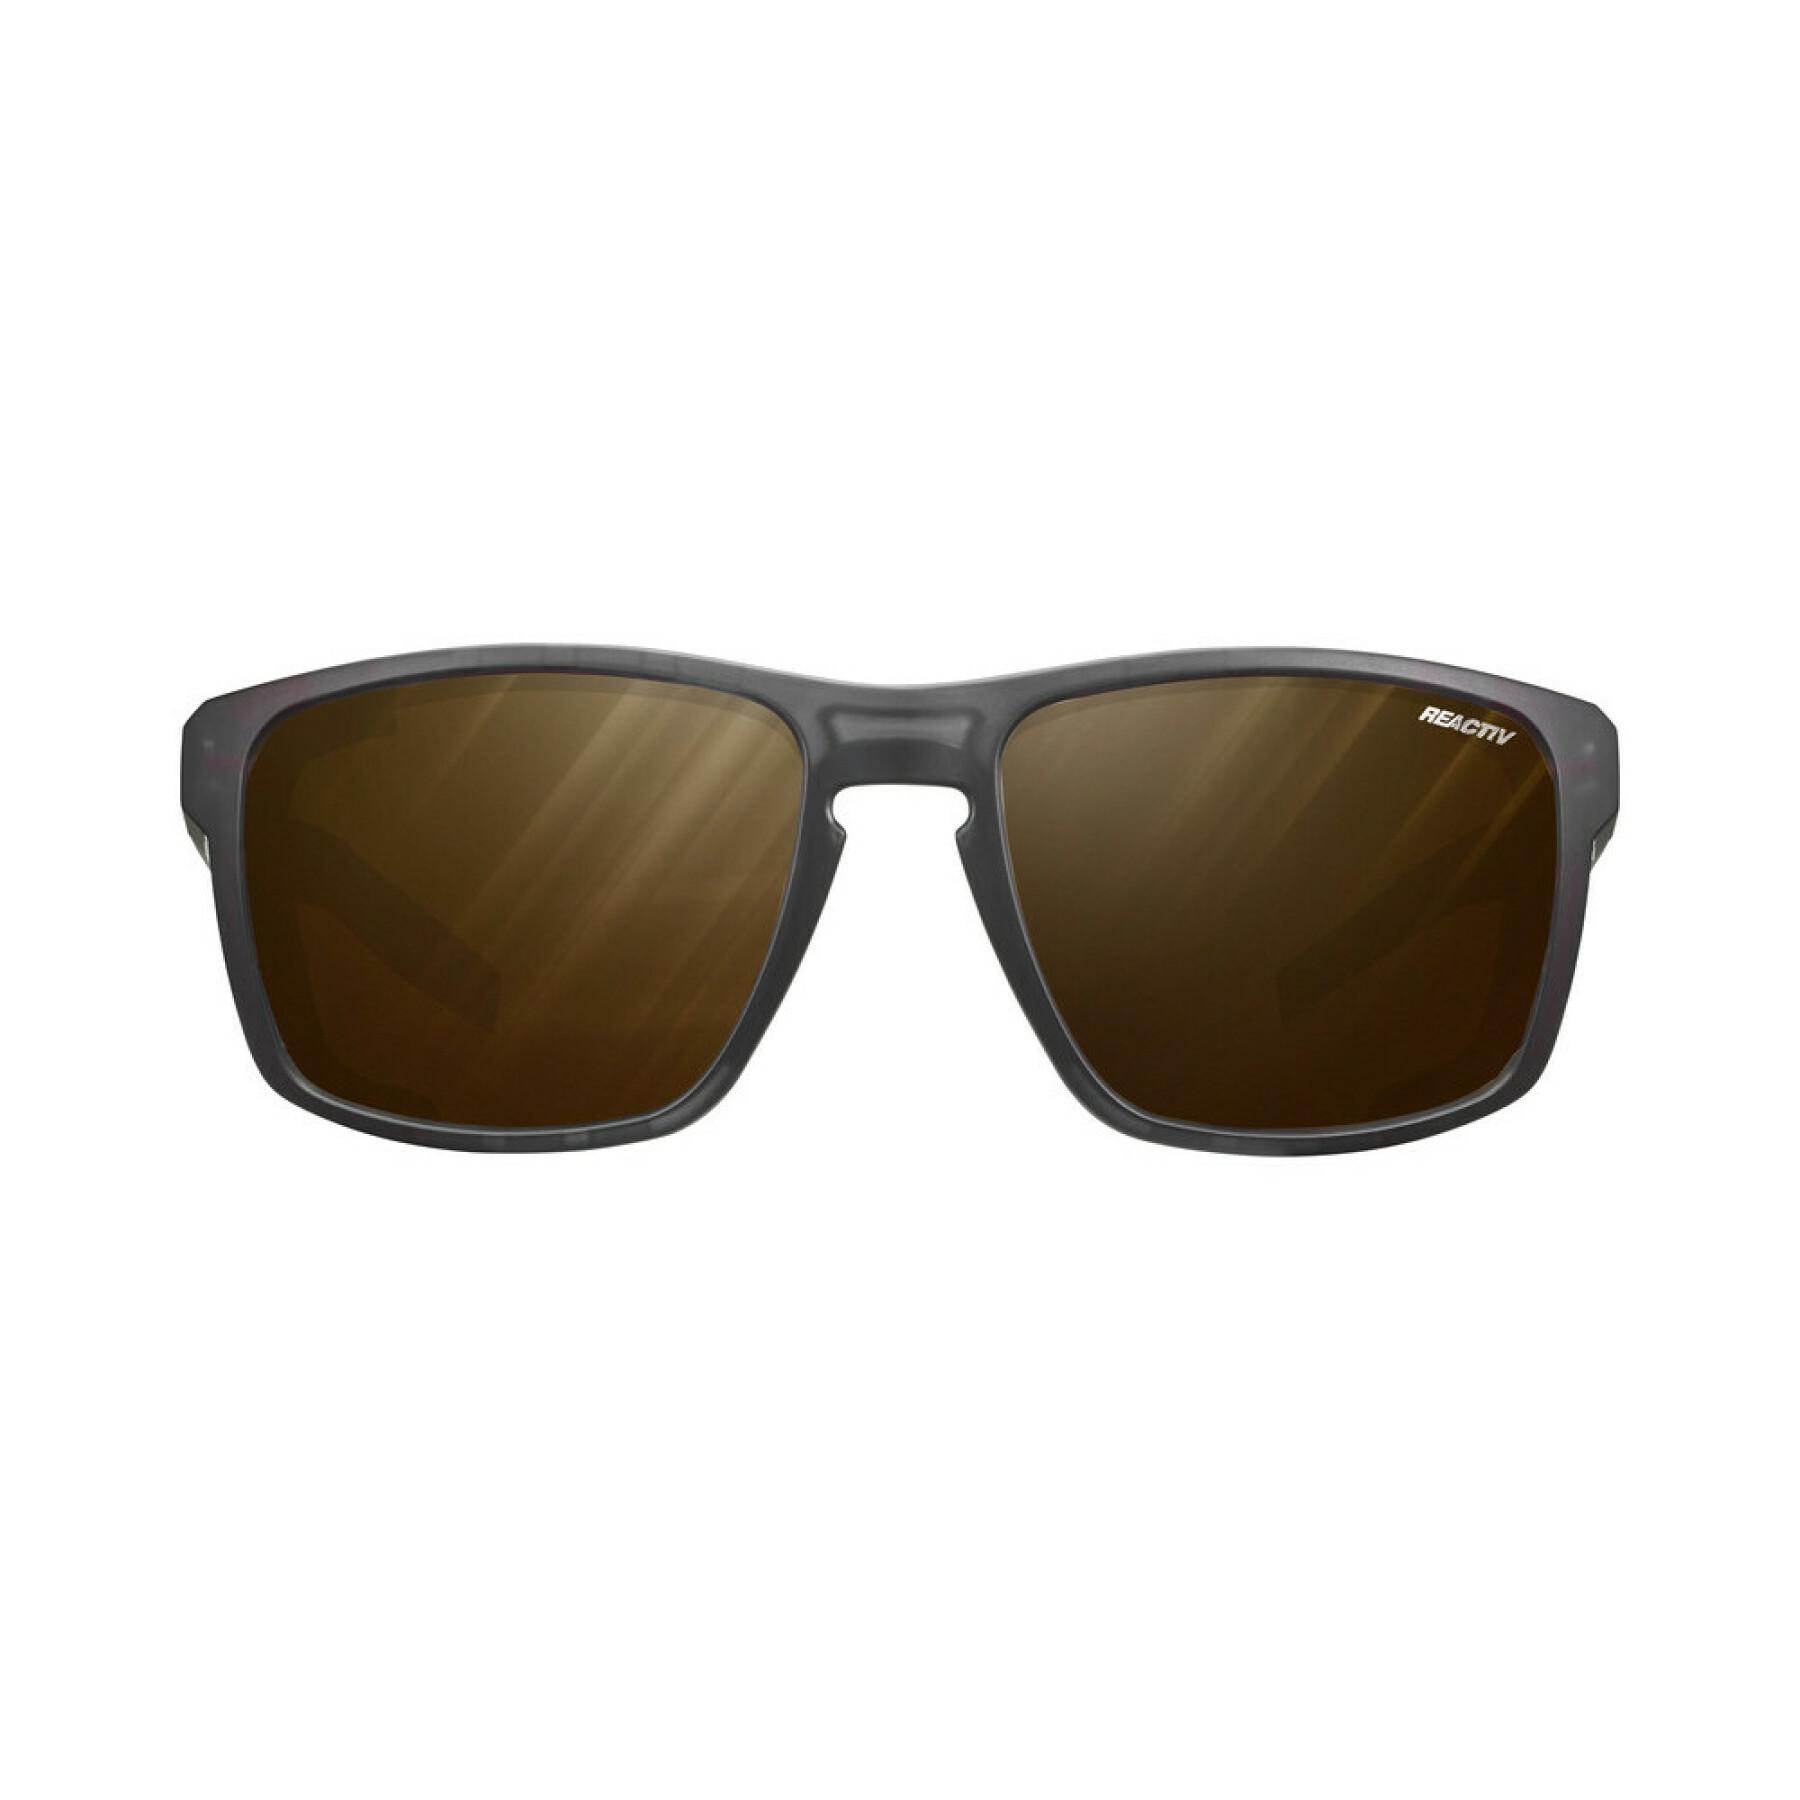 Polarized sunglasses Julbo Shield m Reactiv 2-4